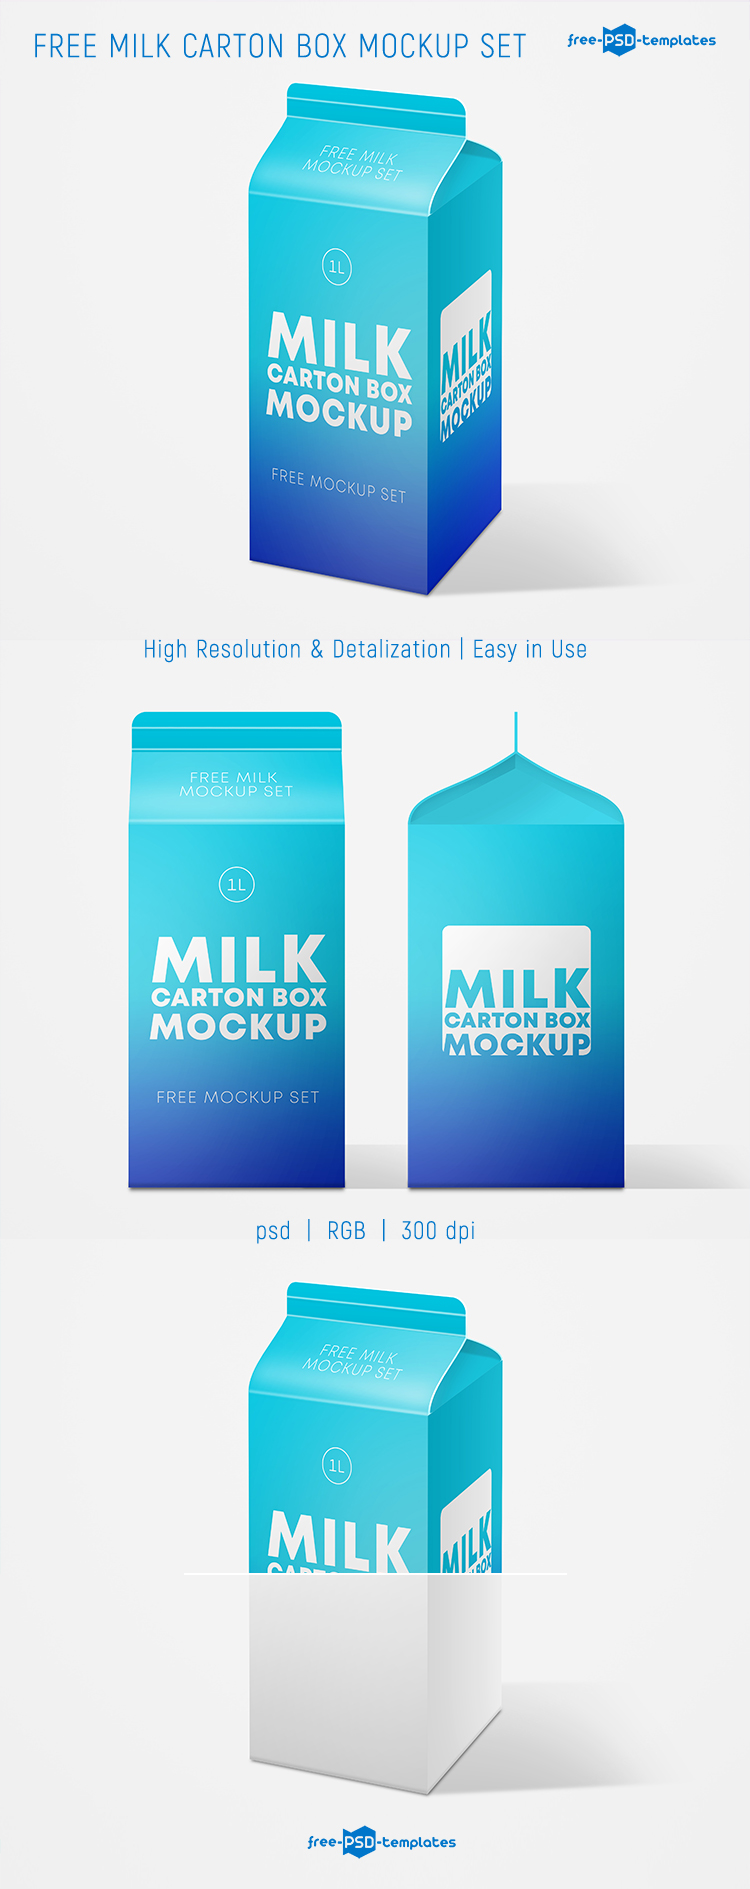 Download Free Milk Carton Box Mockup Set Free Psd Templates PSD Mockup Templates